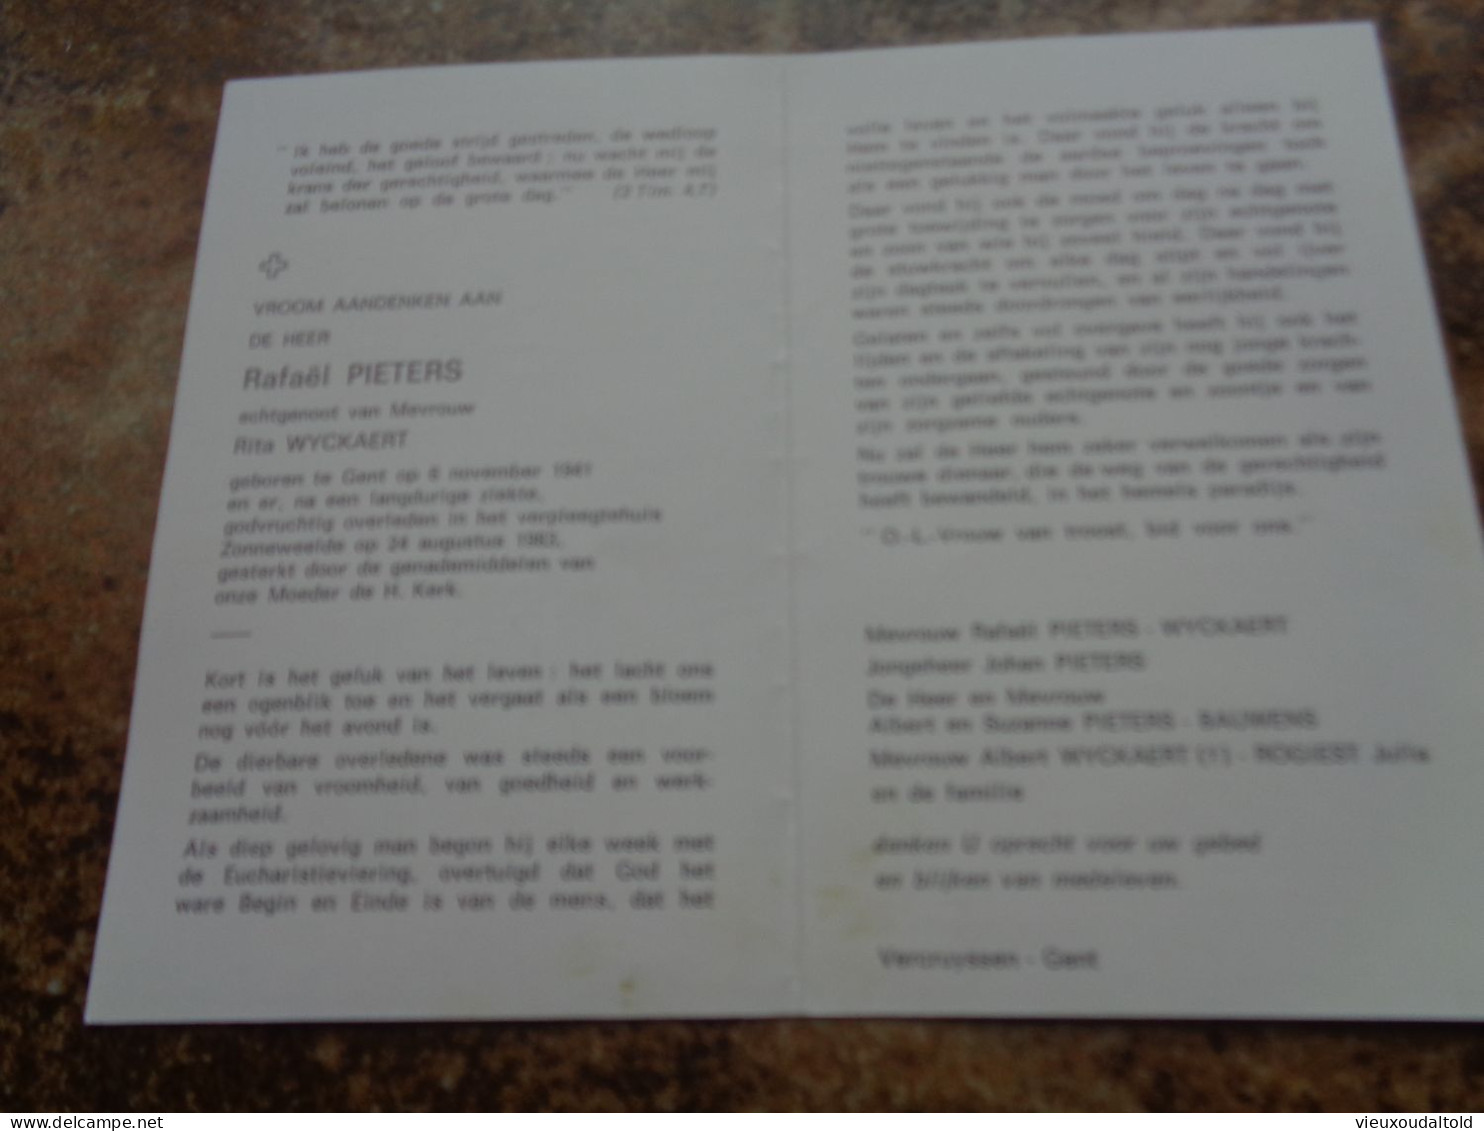 Doodsprentje/Bidprentje  Rafaël PIETERS   Gent 1941-1983  (Echtg Rita WYCKAERT) - Godsdienst & Esoterisme